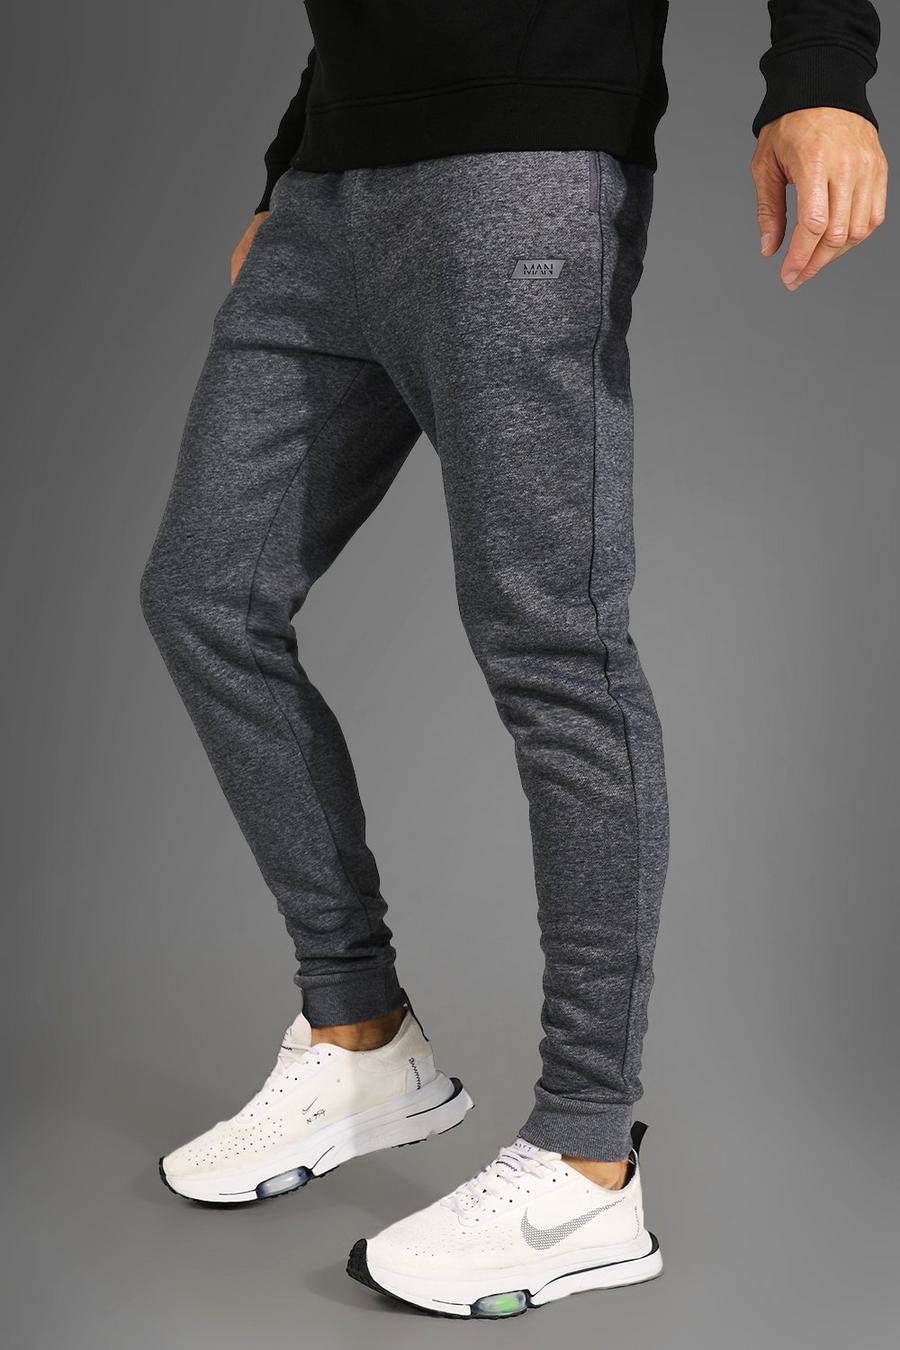 Pantaloni tuta Tall Man Active Gym, Charcoal gris image number 1